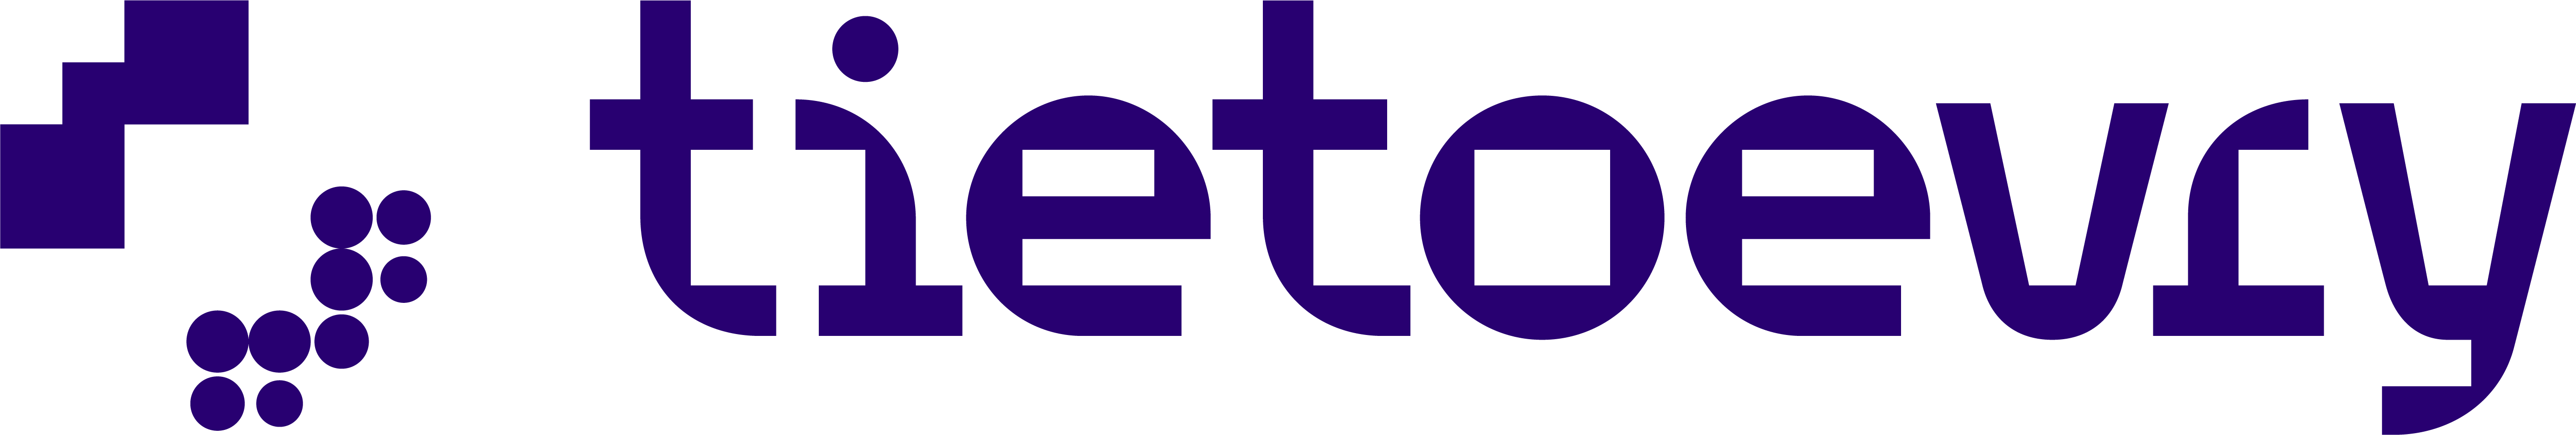 tietoevry-logo-digital